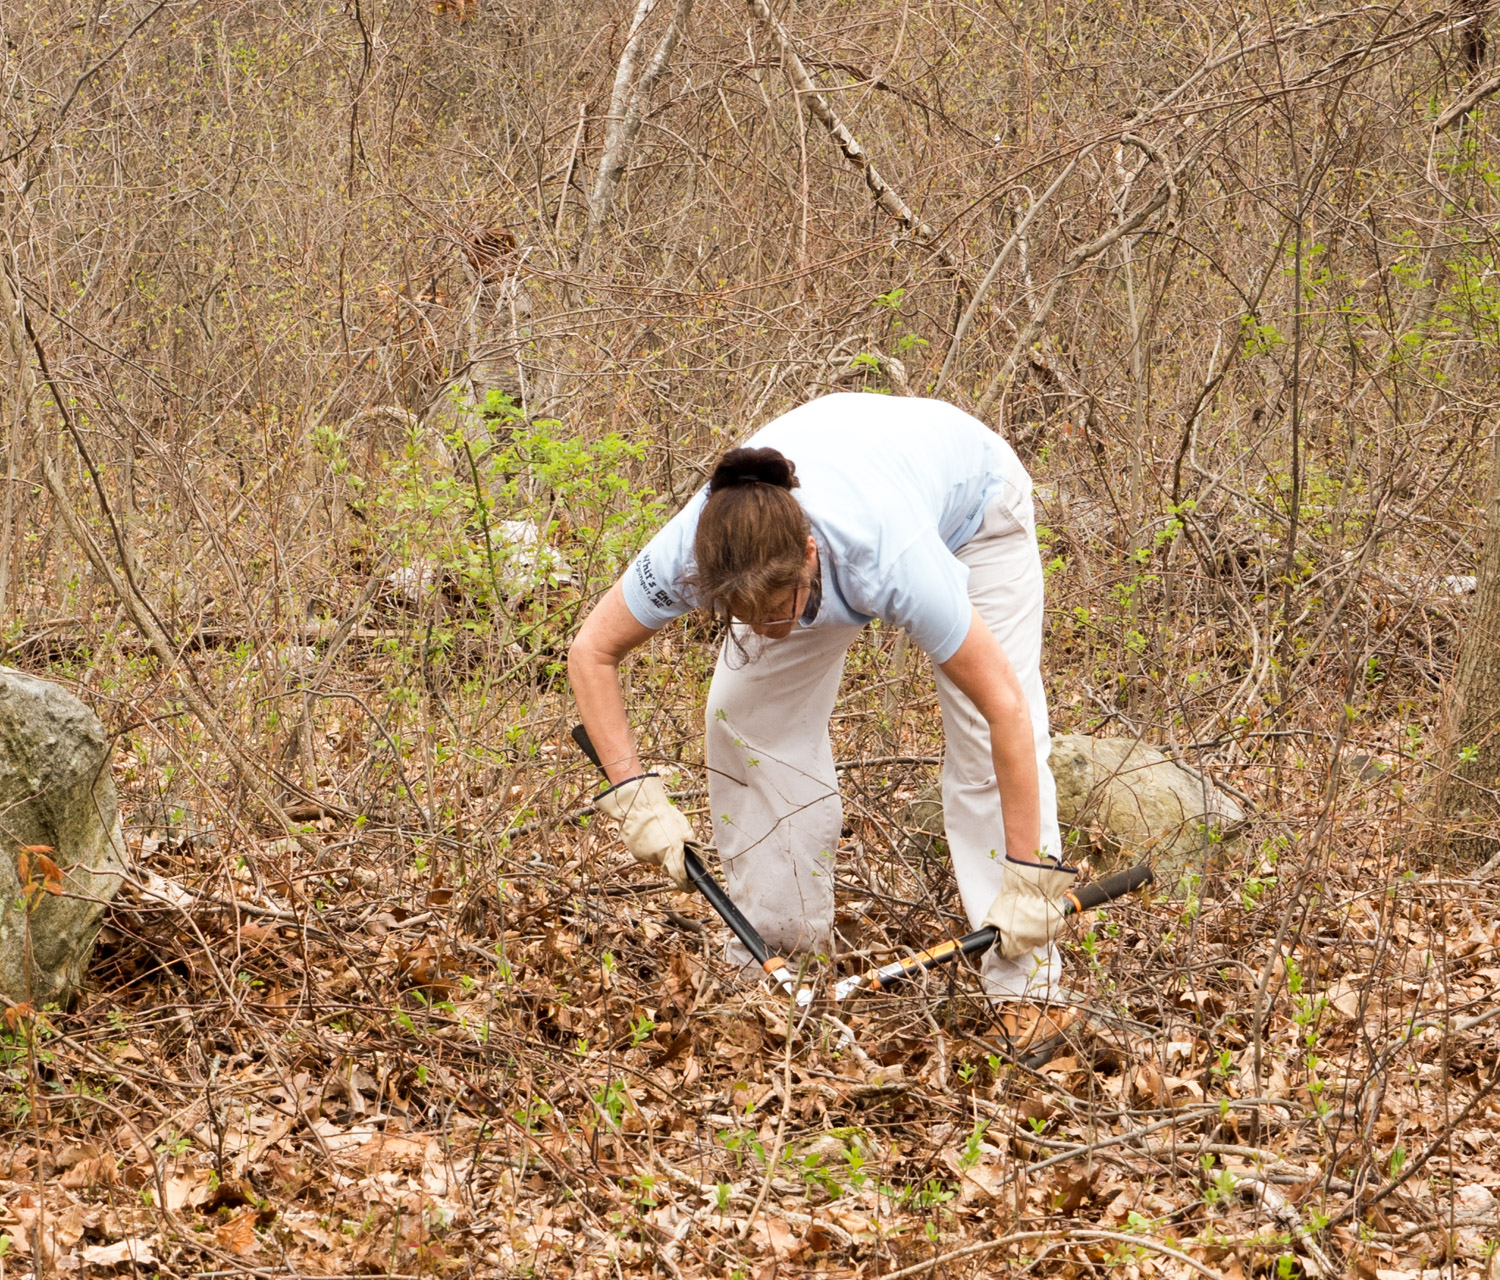 VMWare volunteer invasive vine removal at Mary Cummings Park